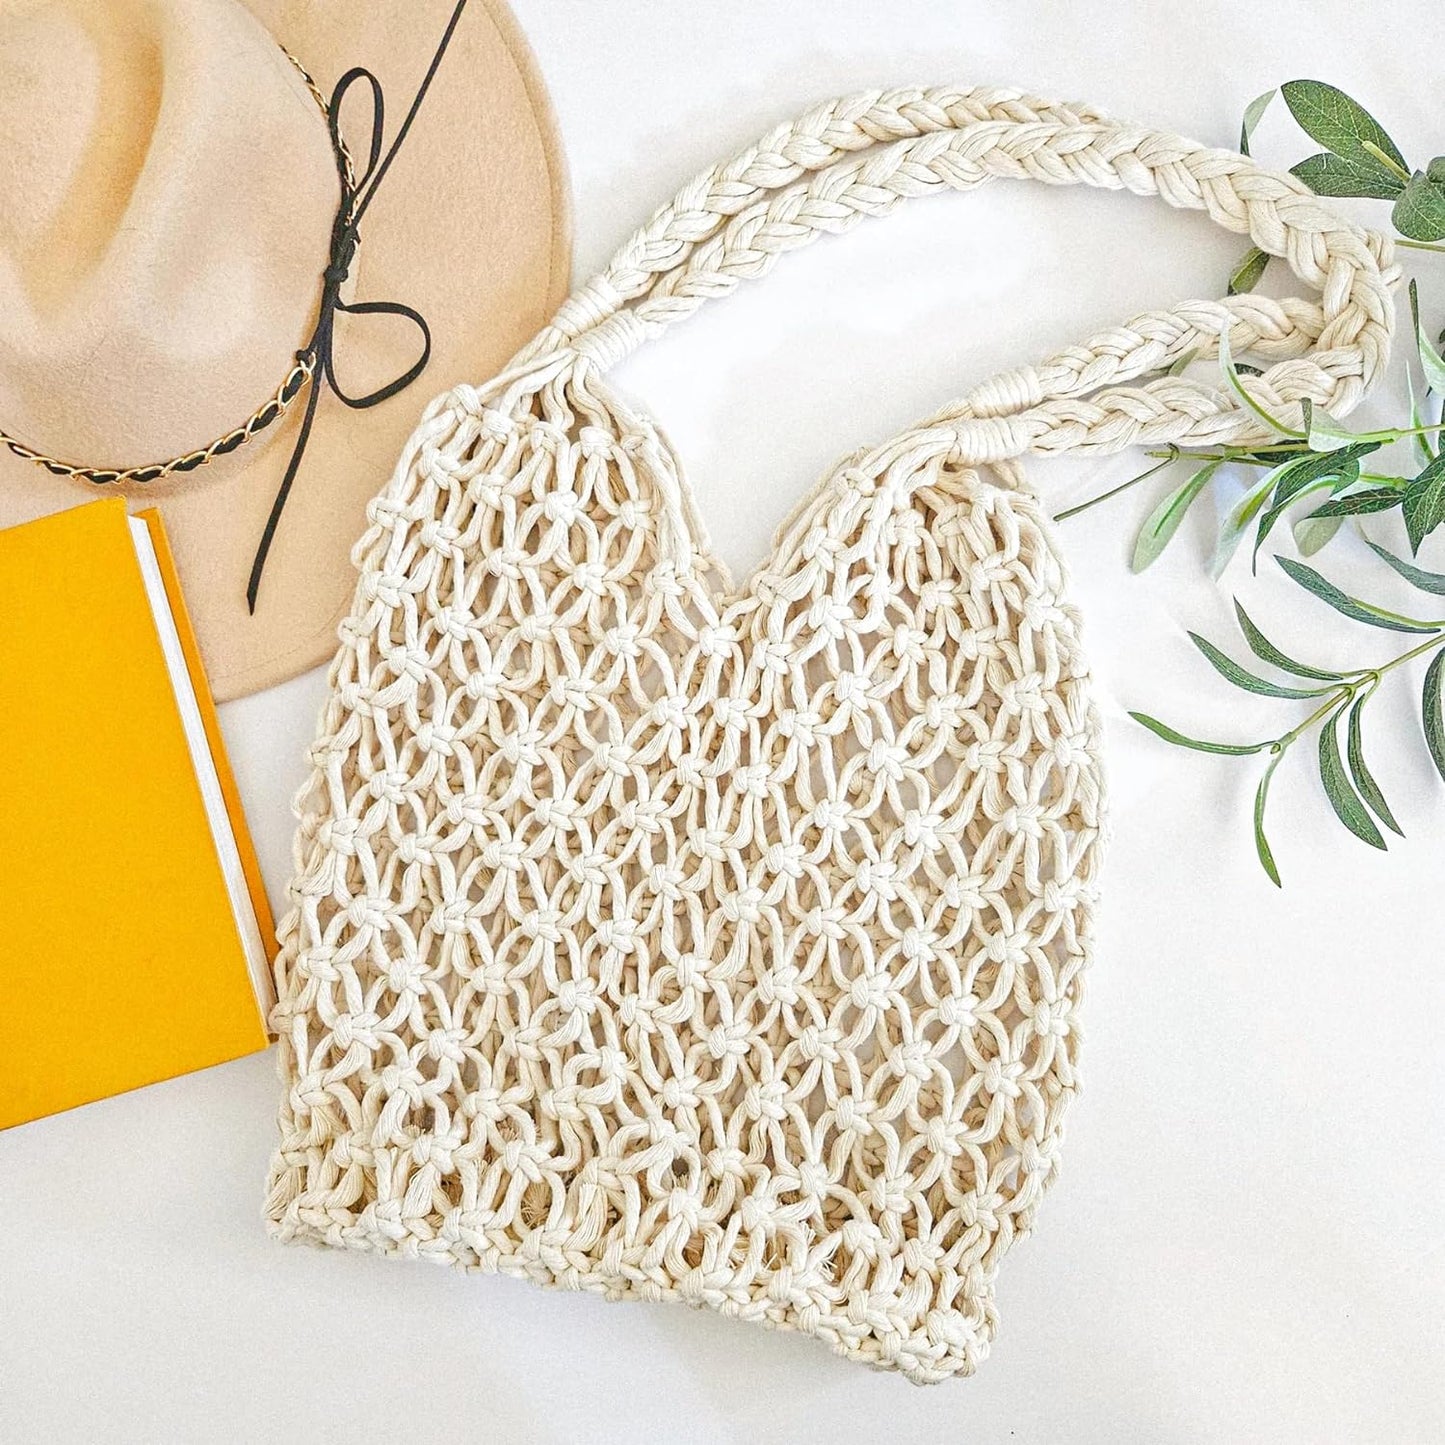 Macrame Kit for Beginners, DIY Macrame Market Bag Kit with 4Mm Cotton Cord, Measuring Tape, Pattern and Video Tutorial, Trendy Handbag Kit